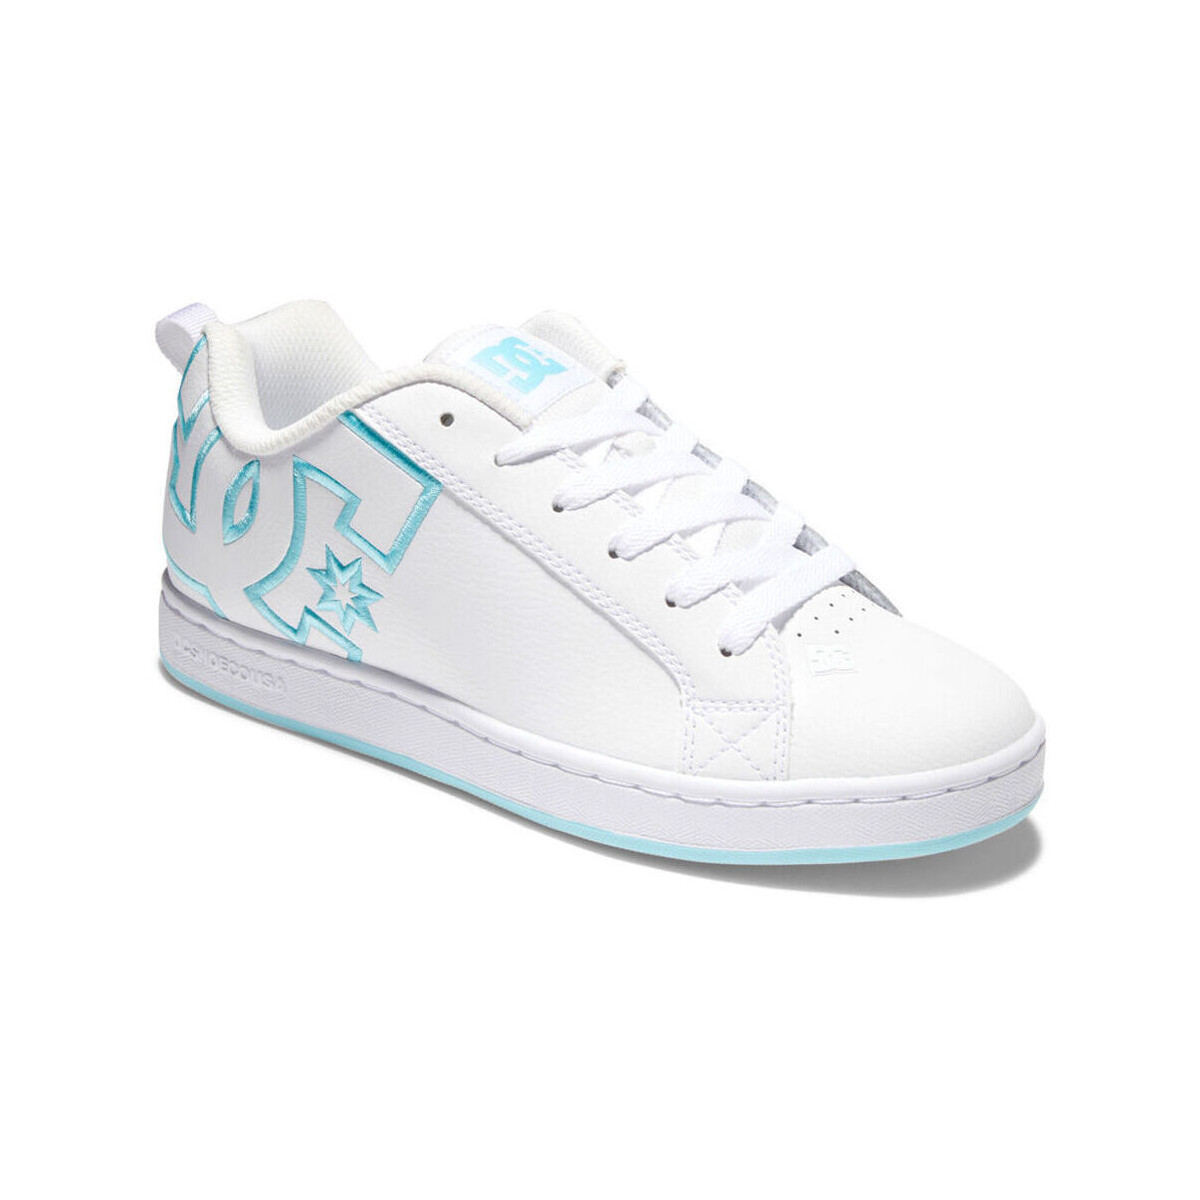 DC Shoes Blanc Court graffik 300678 WHITE/WHITE/BLUE (XWWB) 5tIb3PxF